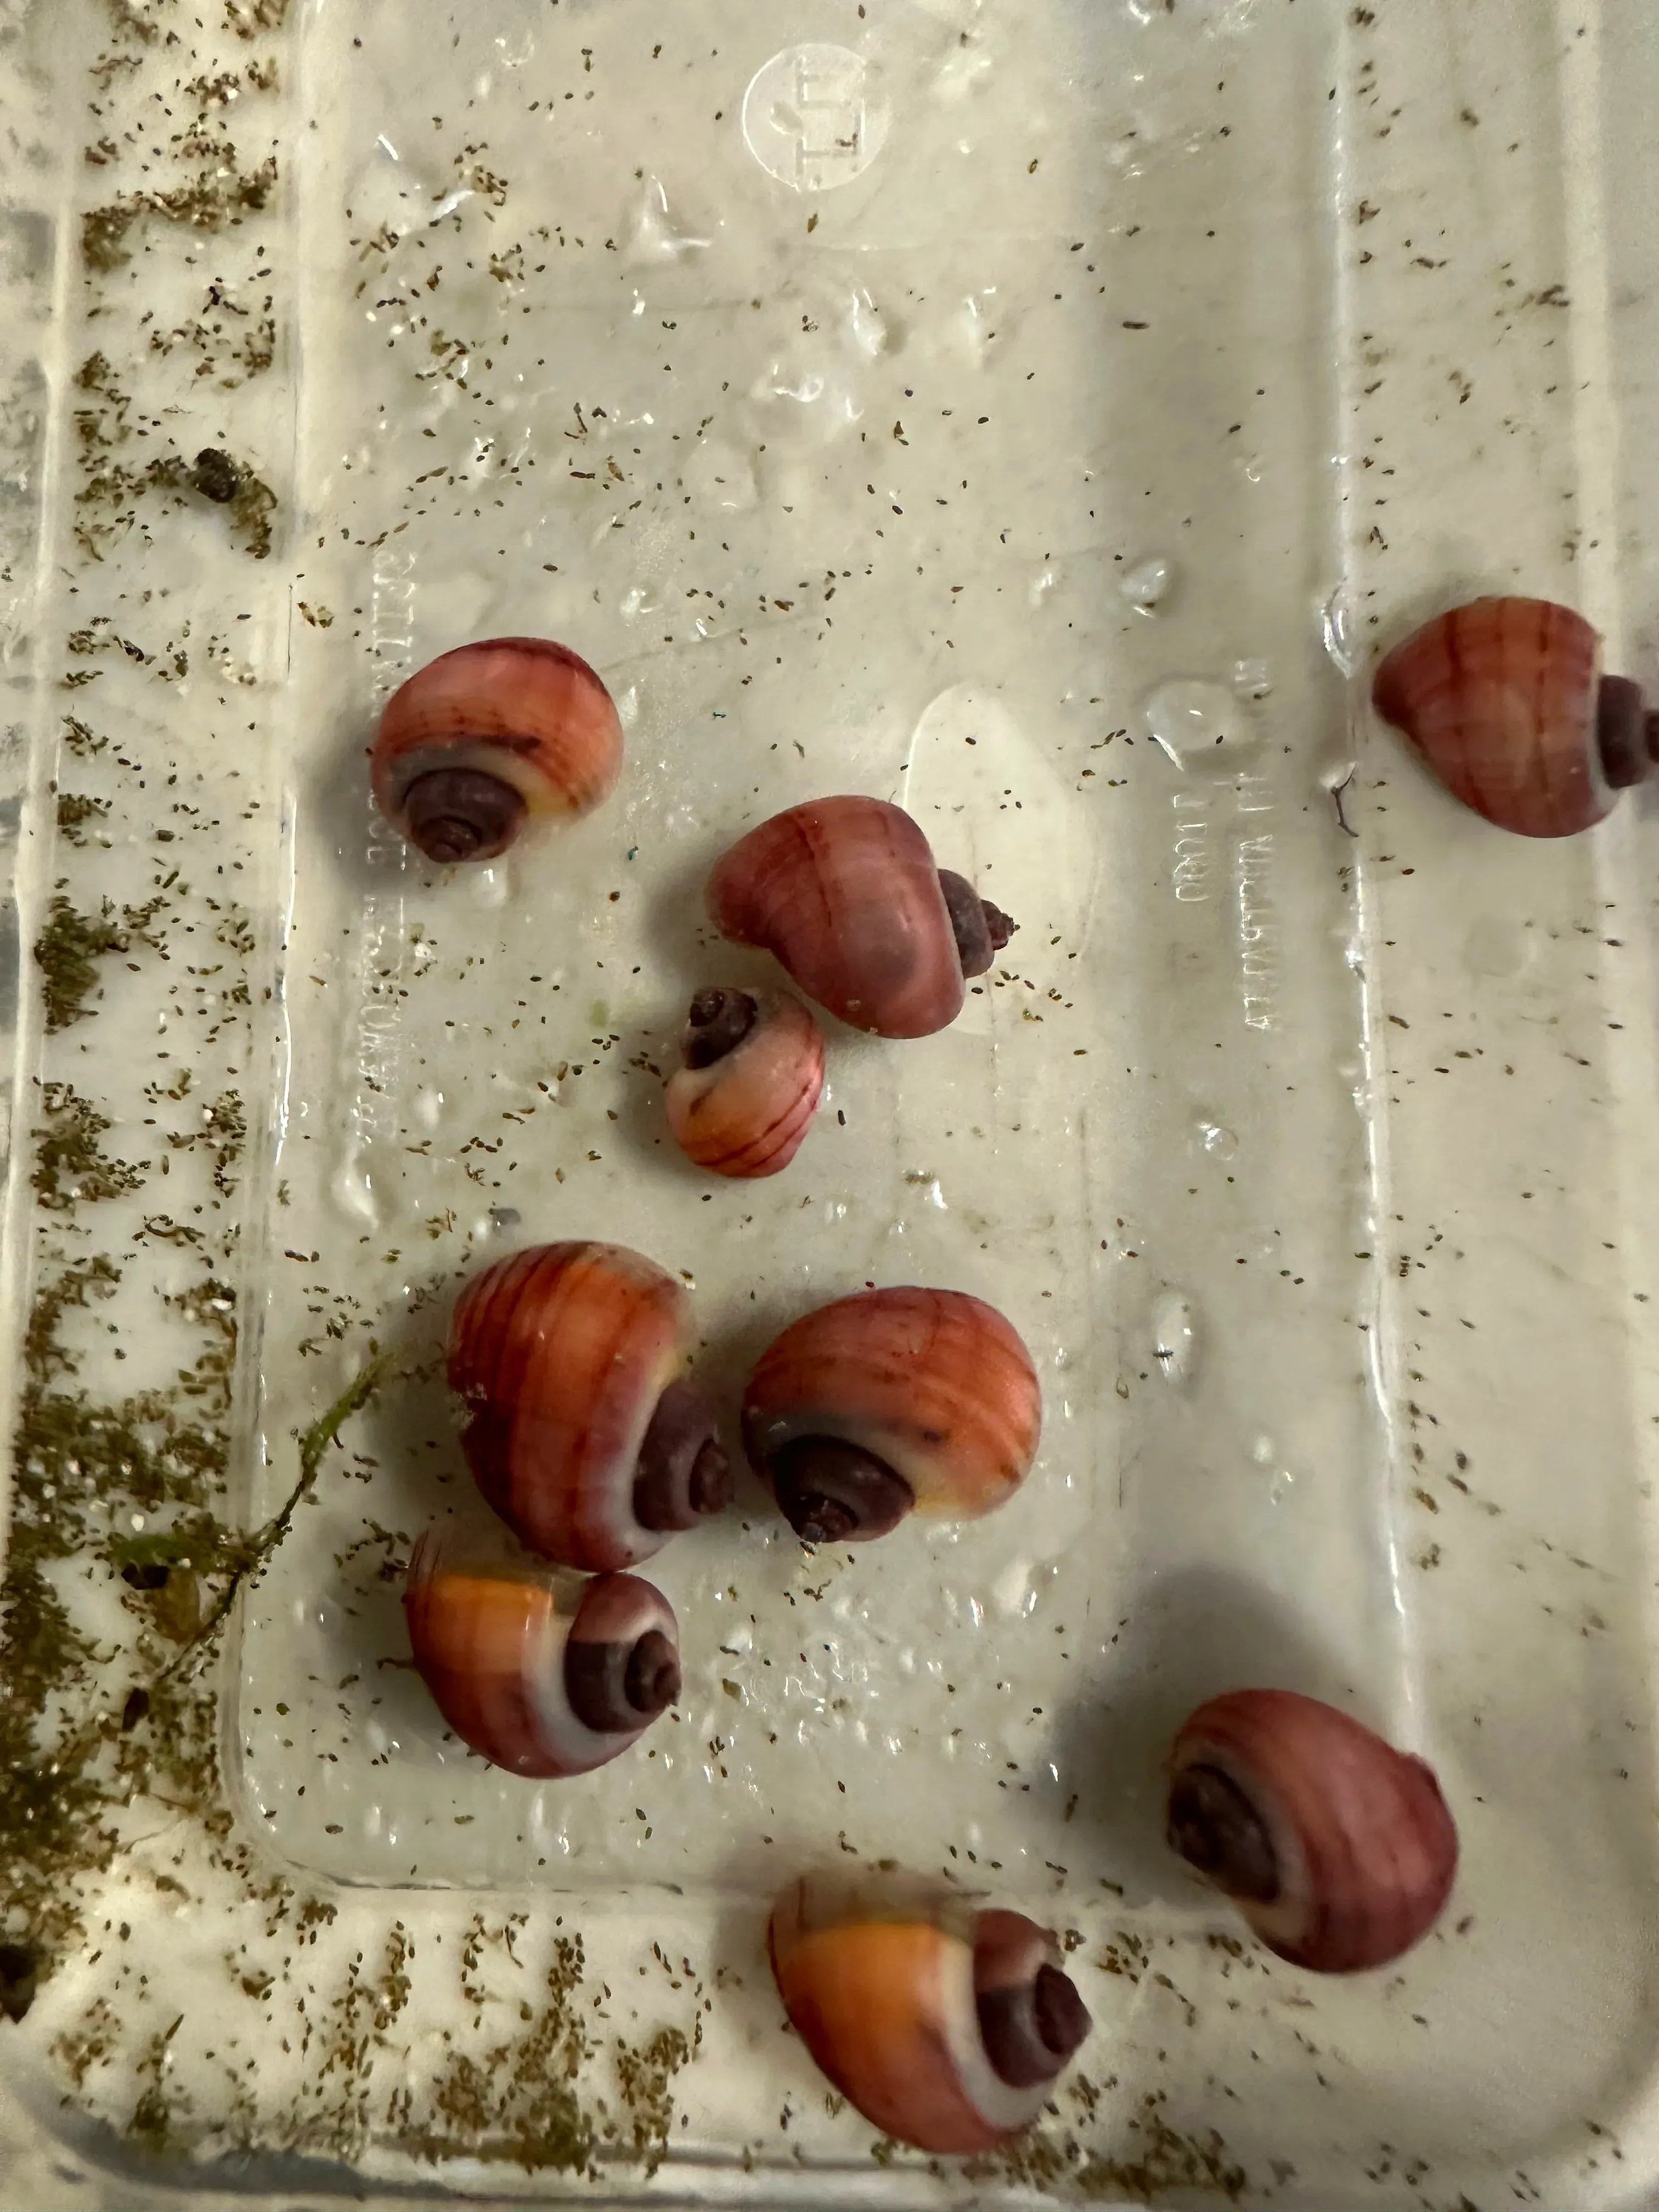 Rare Magenta Mystery Snails